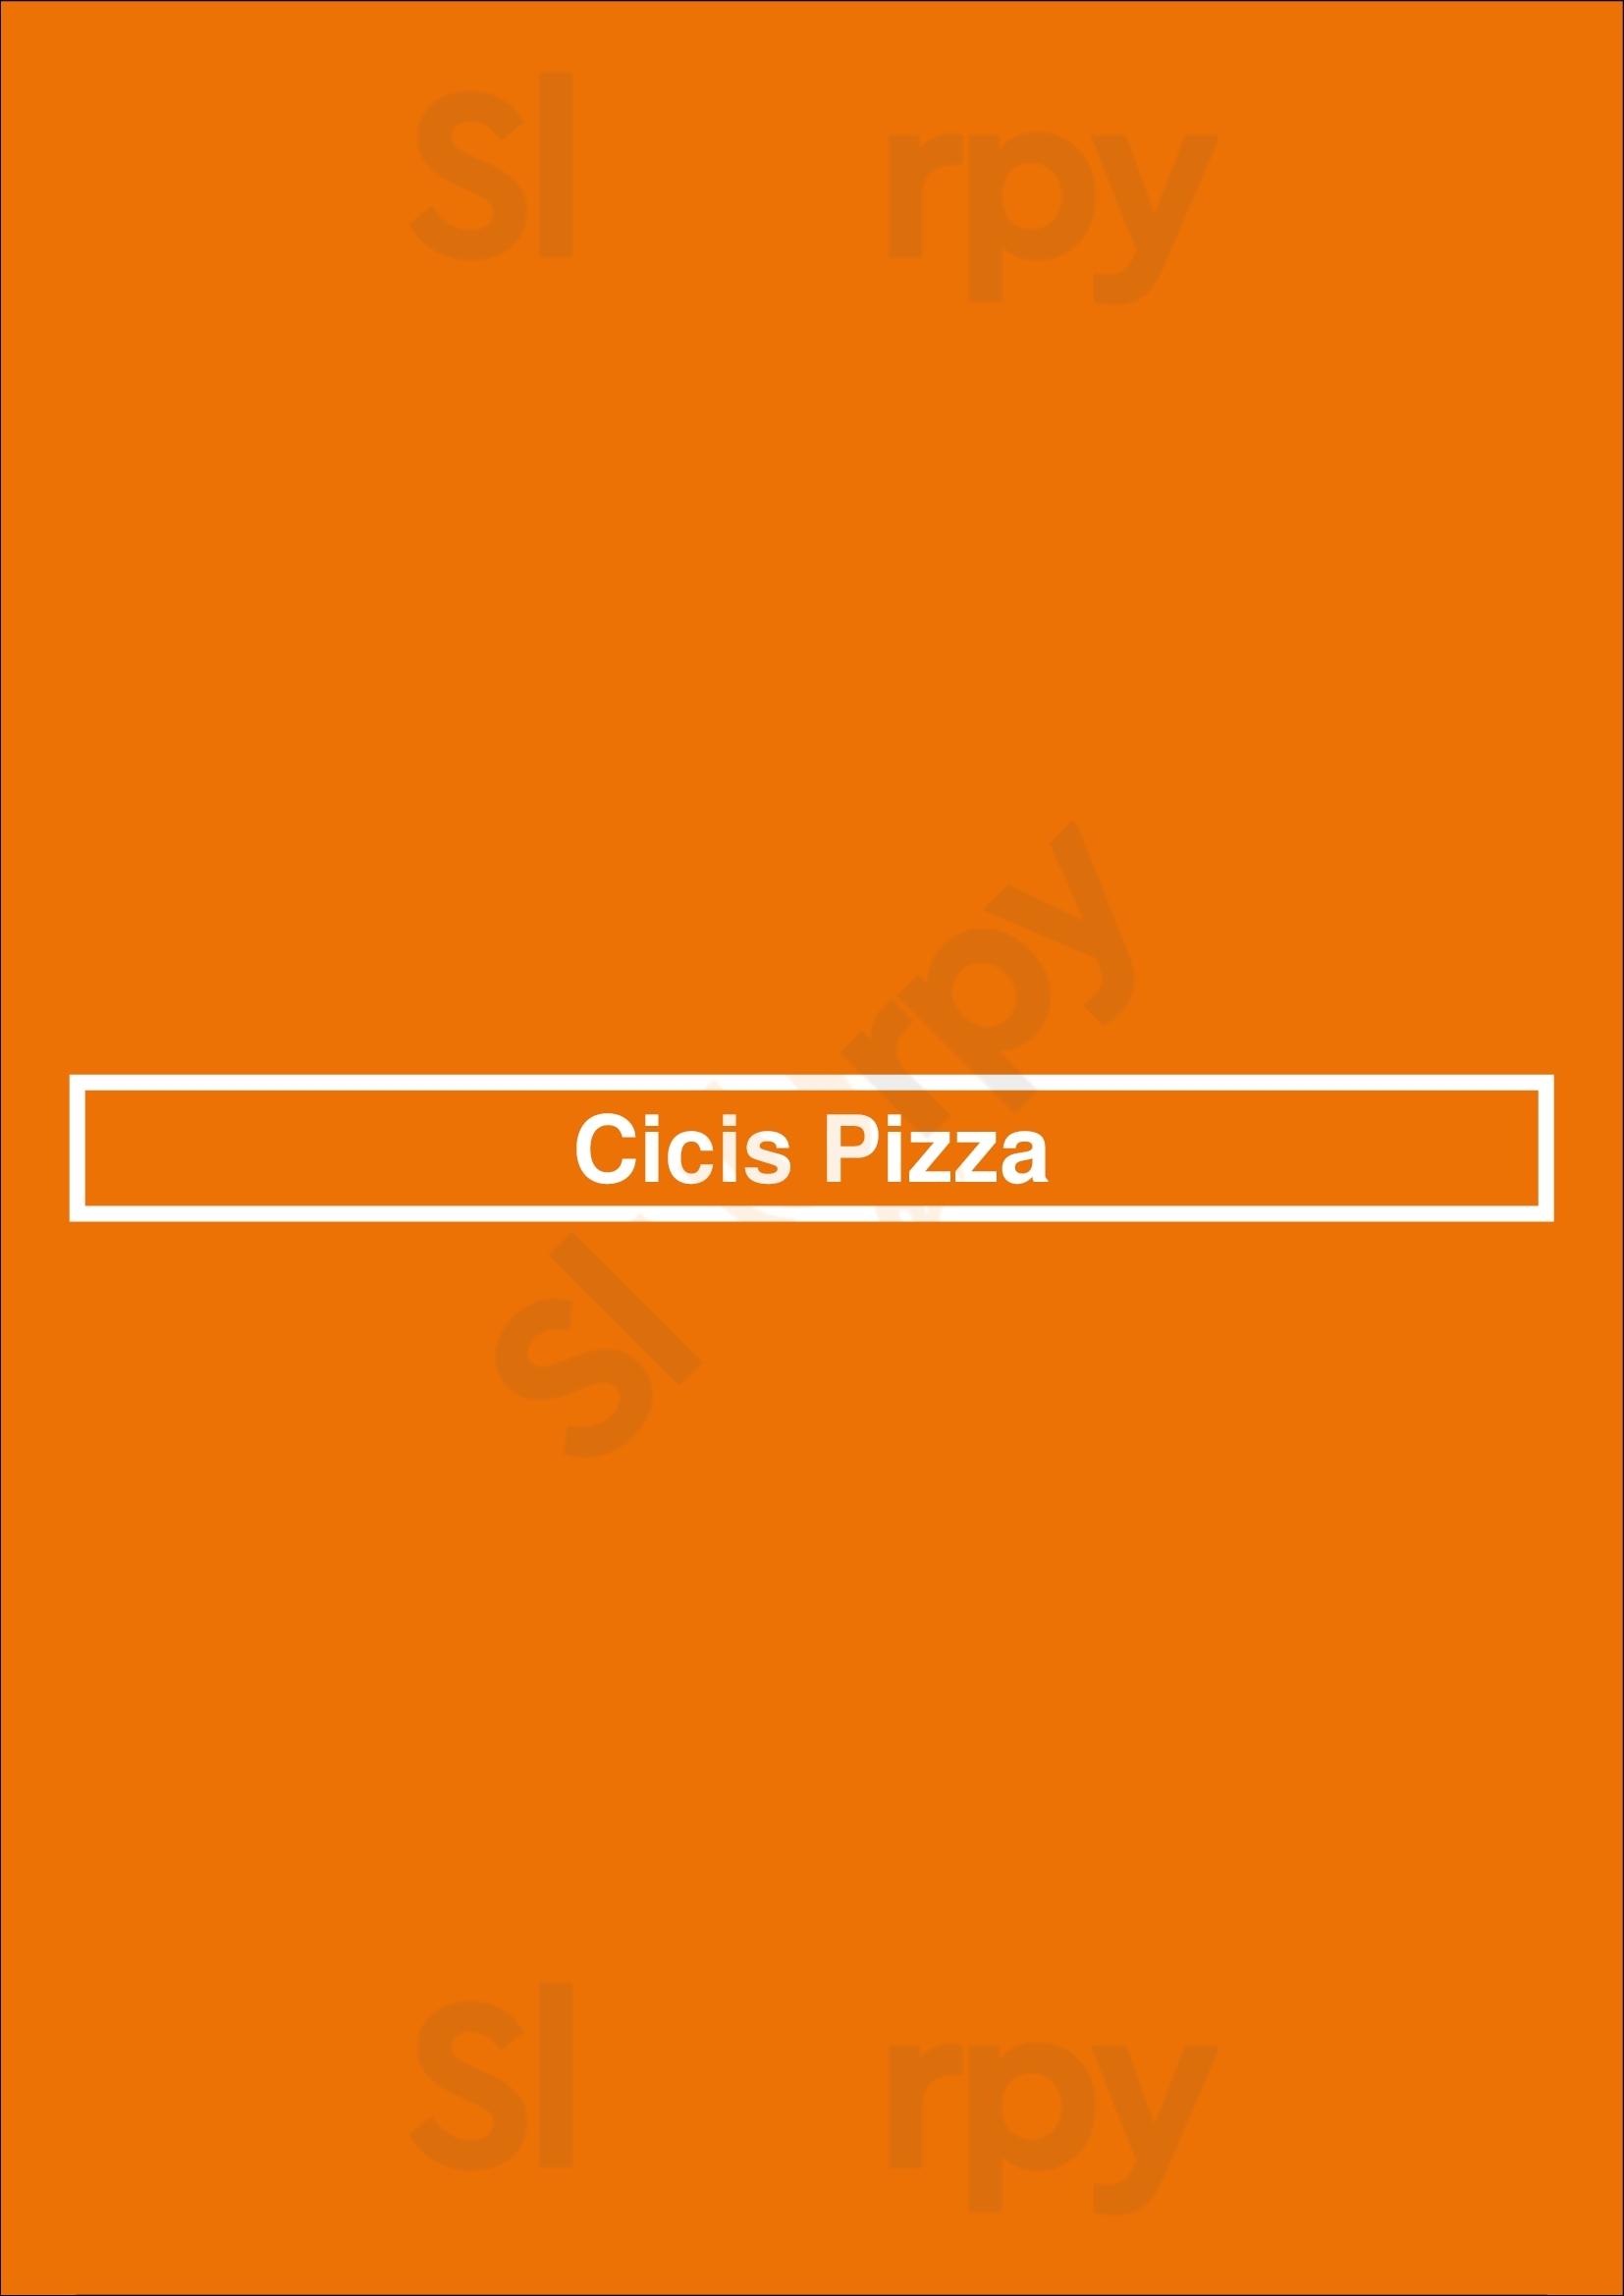 Cicis Pizza San Antonio Menu - 1